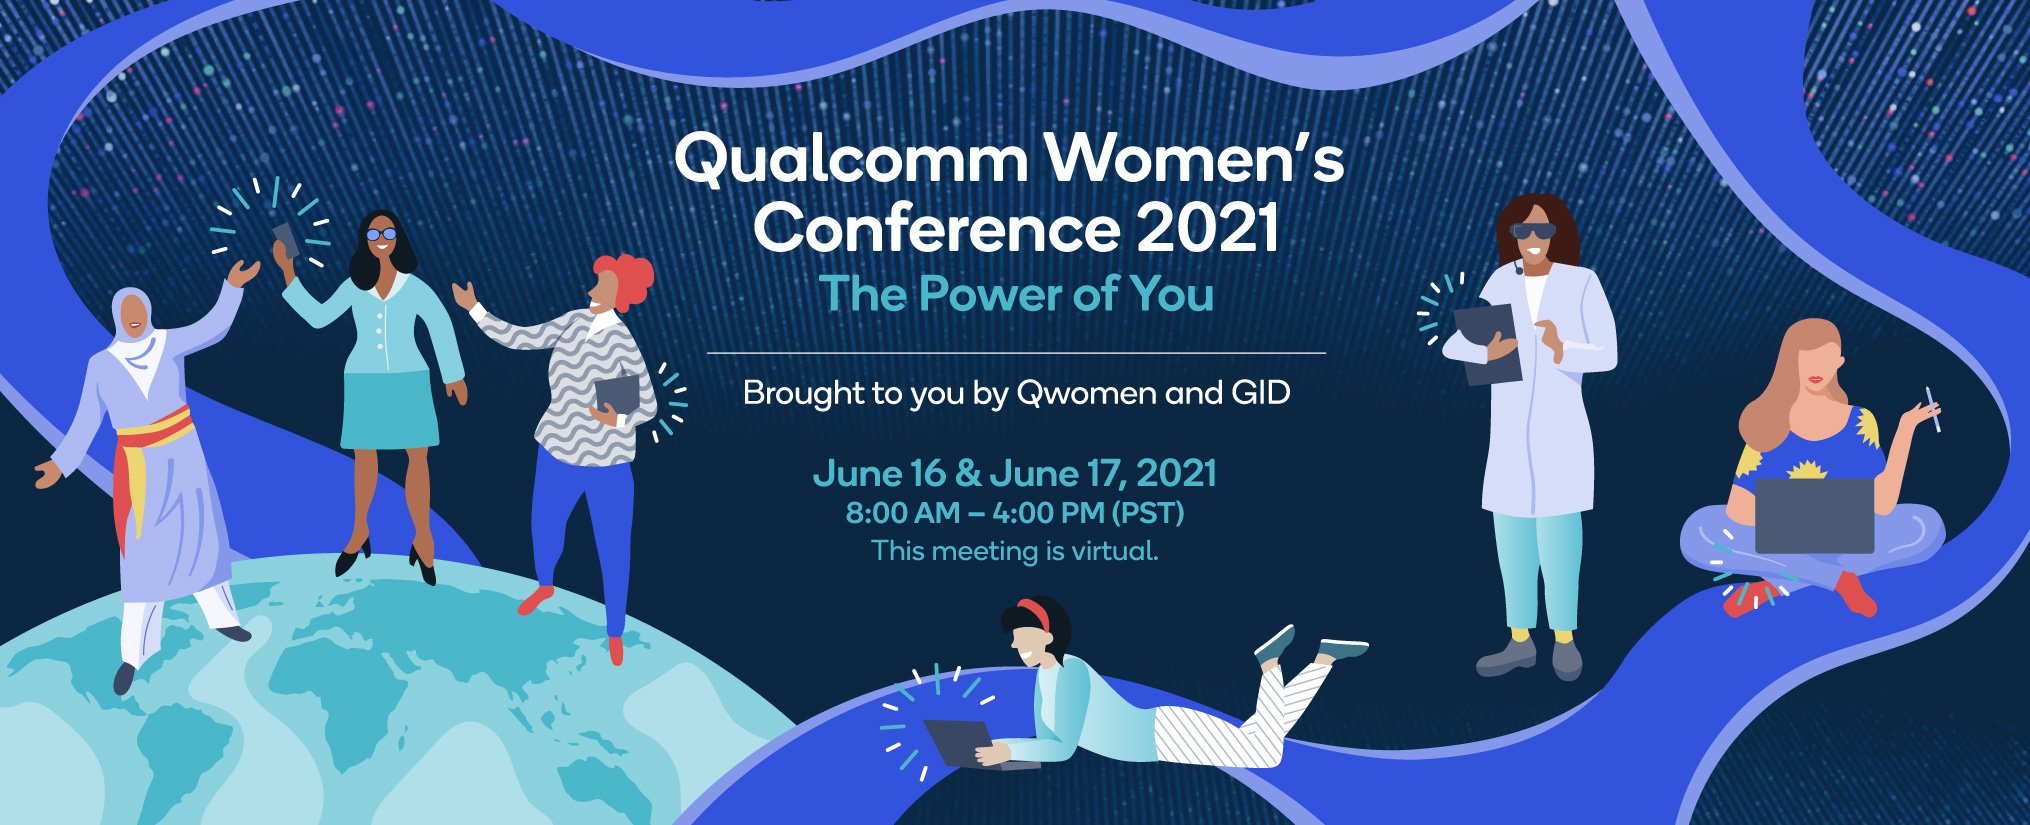 Qualcomm Women's Conference 2021 artwork